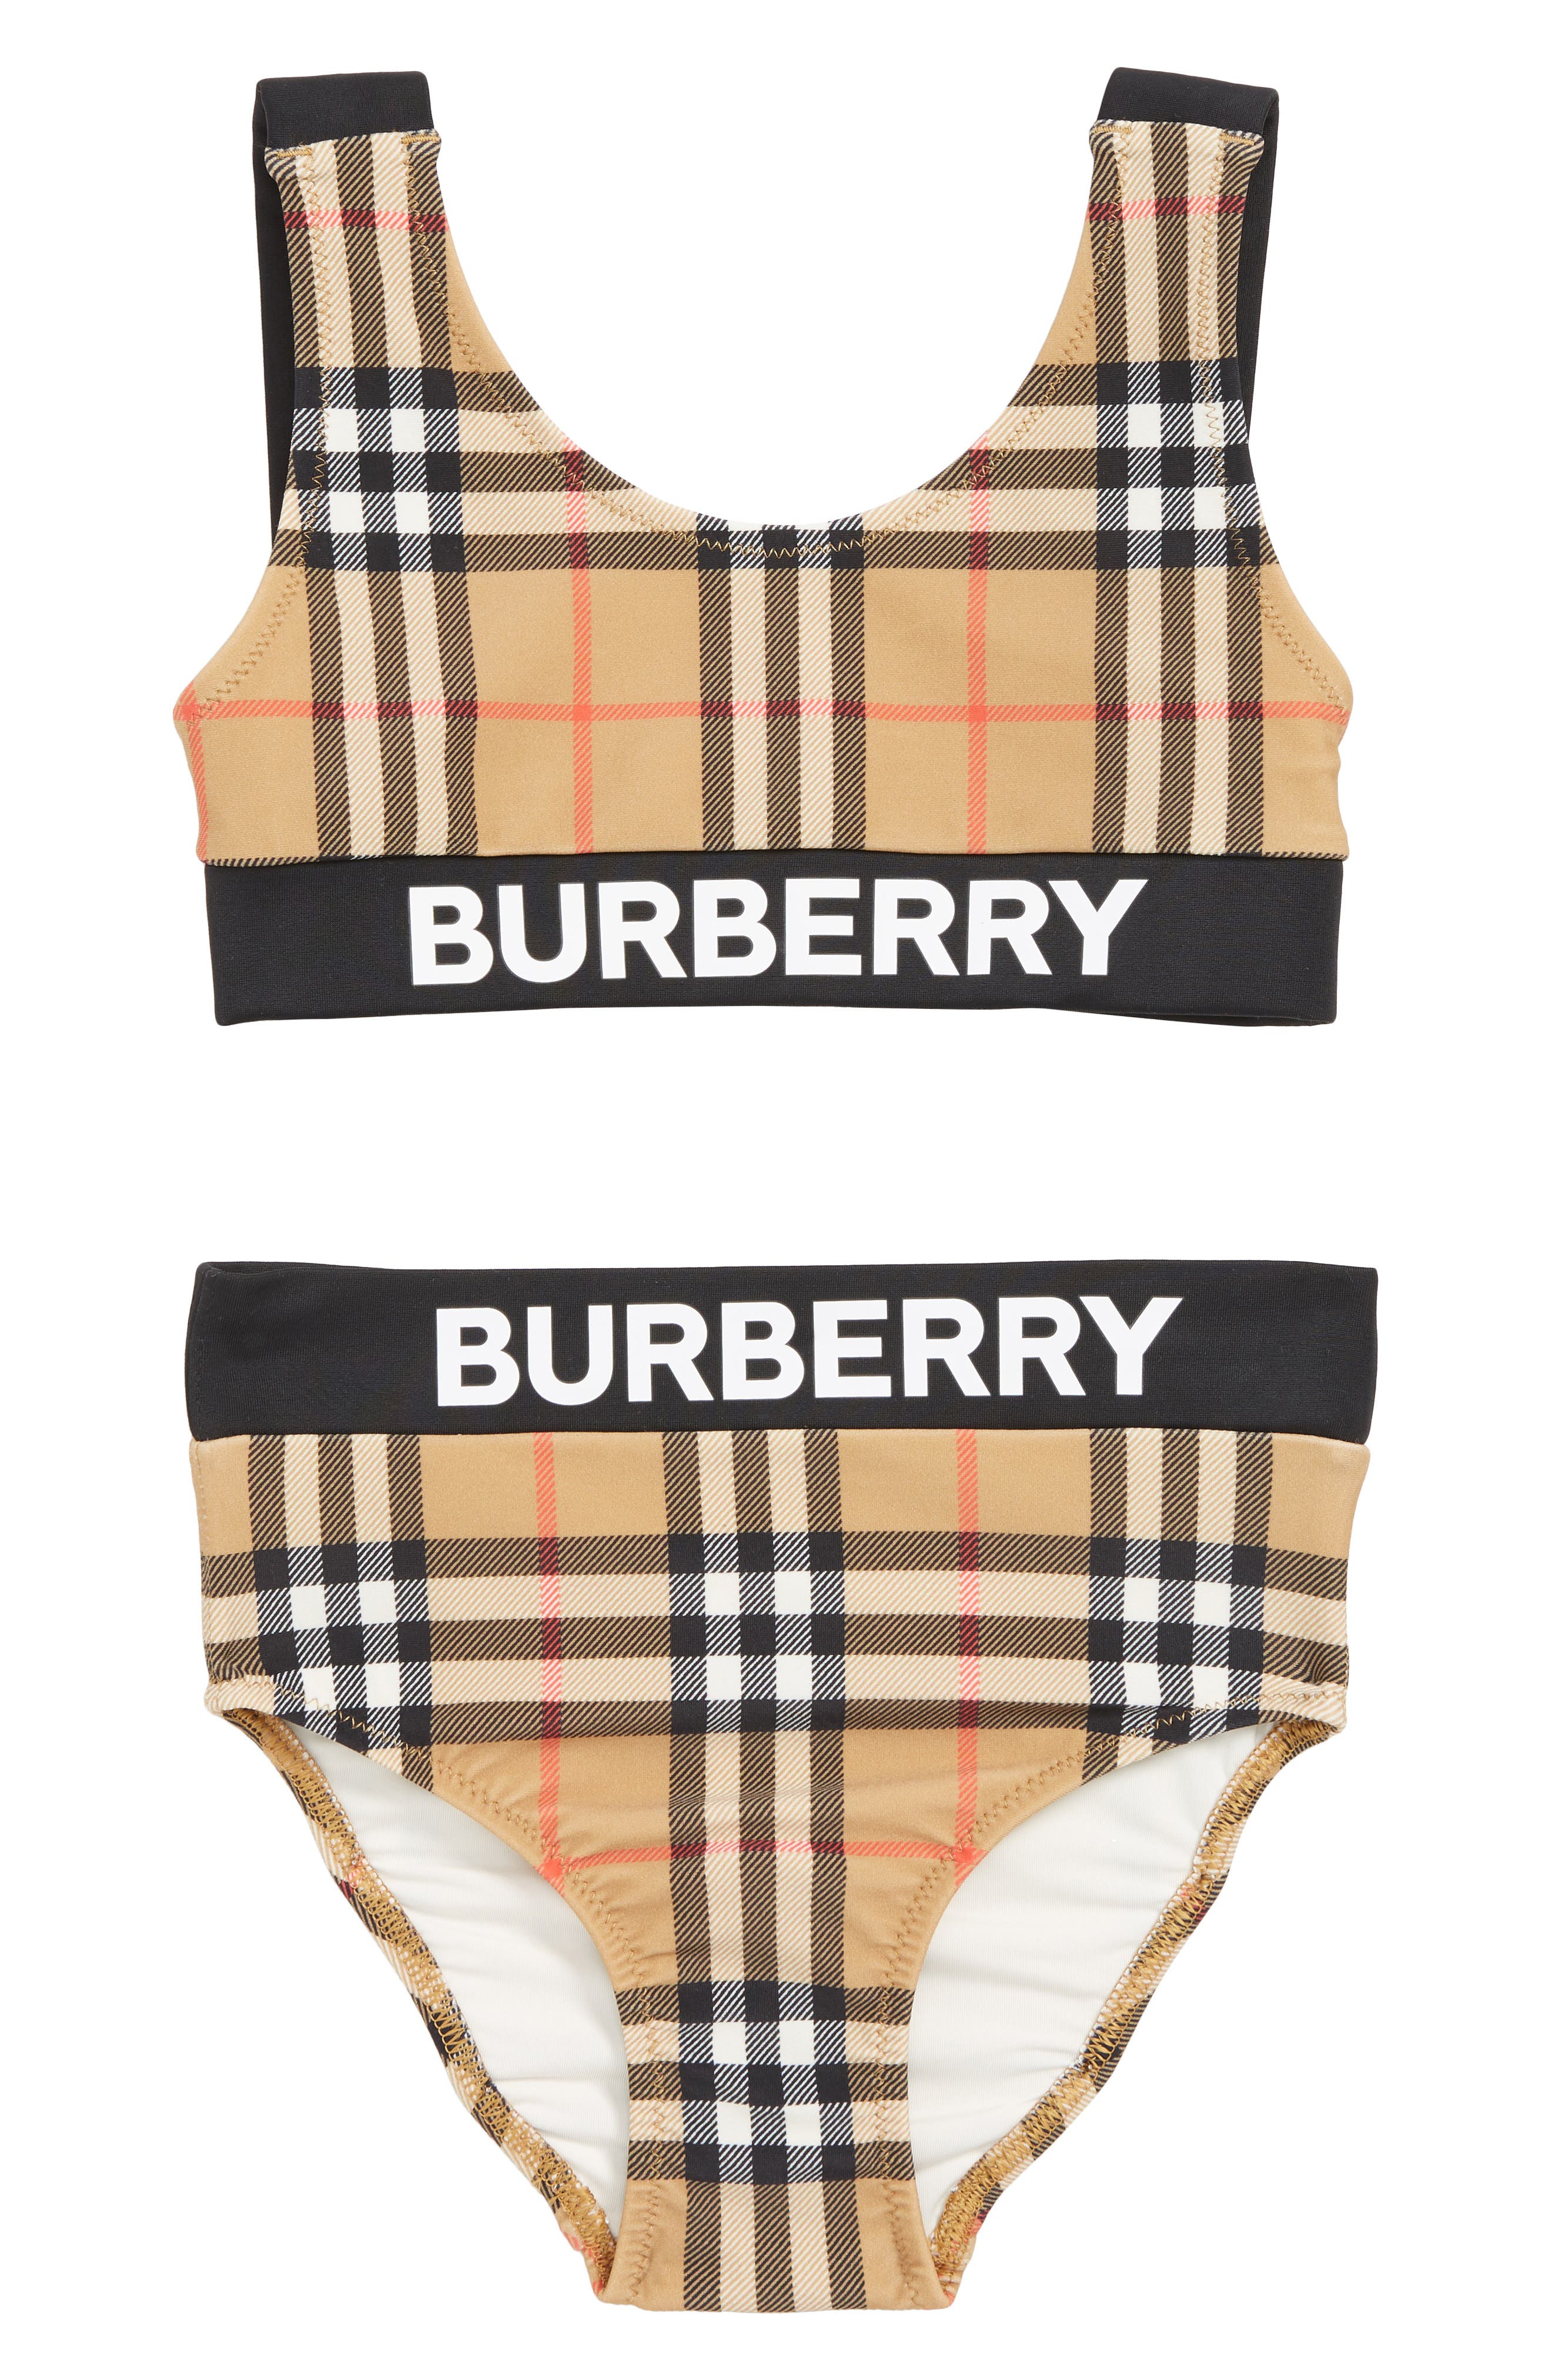 burberry swimsuit